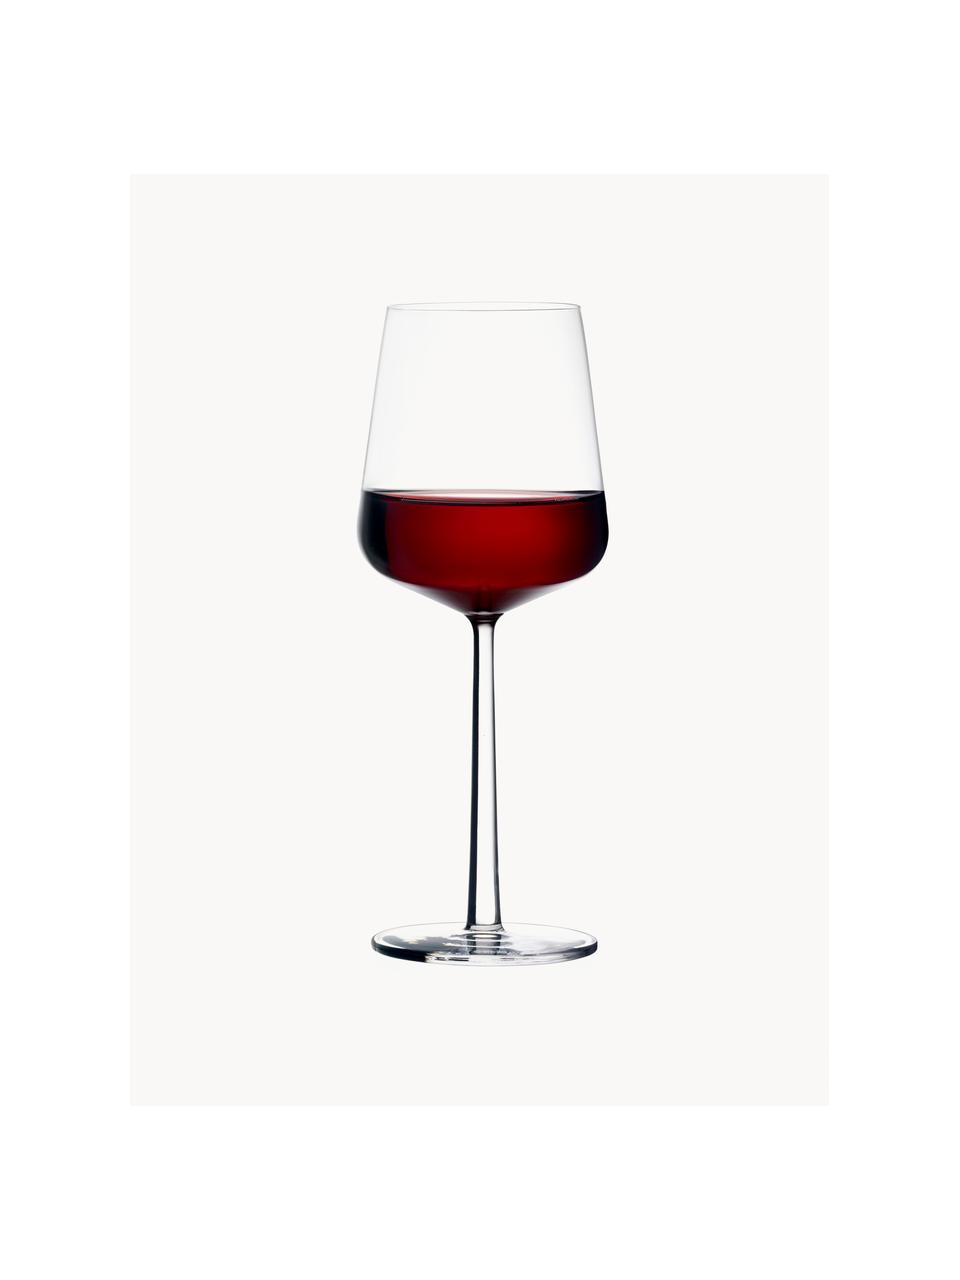 Bicchieri vino Essence 2 pz, Vetro, Trasparente, Ø 7 x Alt. 23 cm, 450 ml